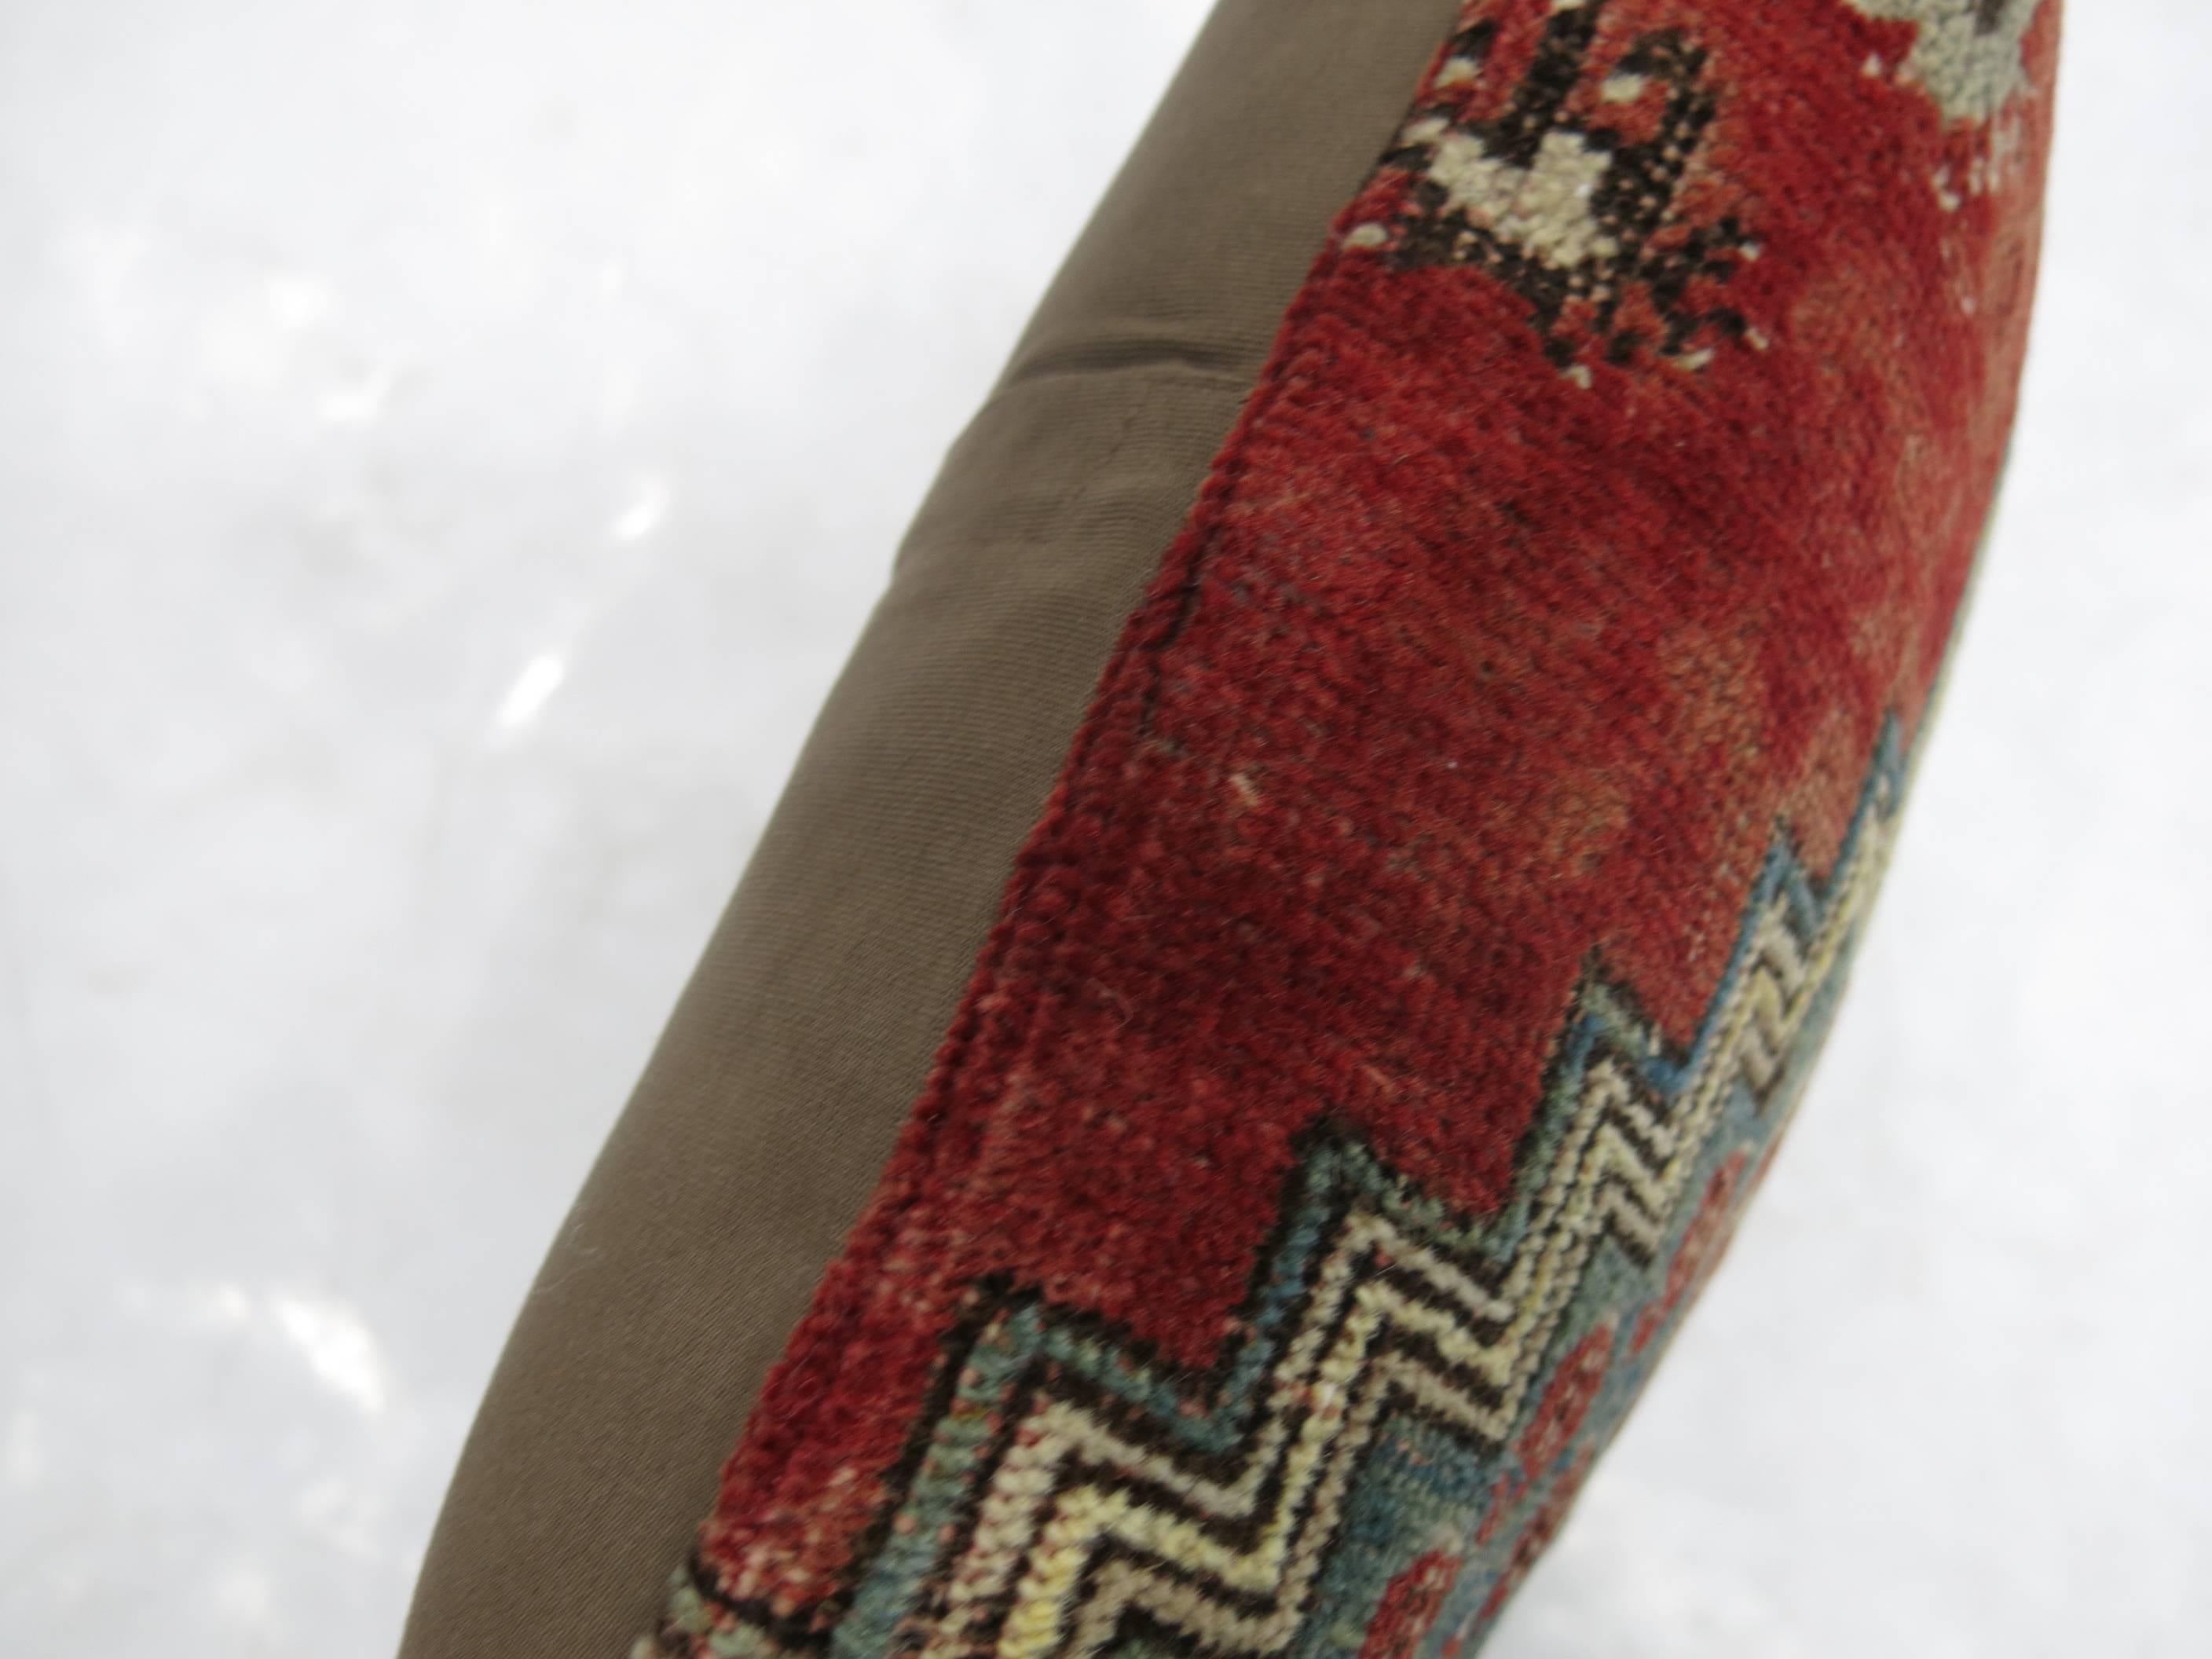 Lumbar size pillow made from a vintage Turkish rug.

14'' x 21''